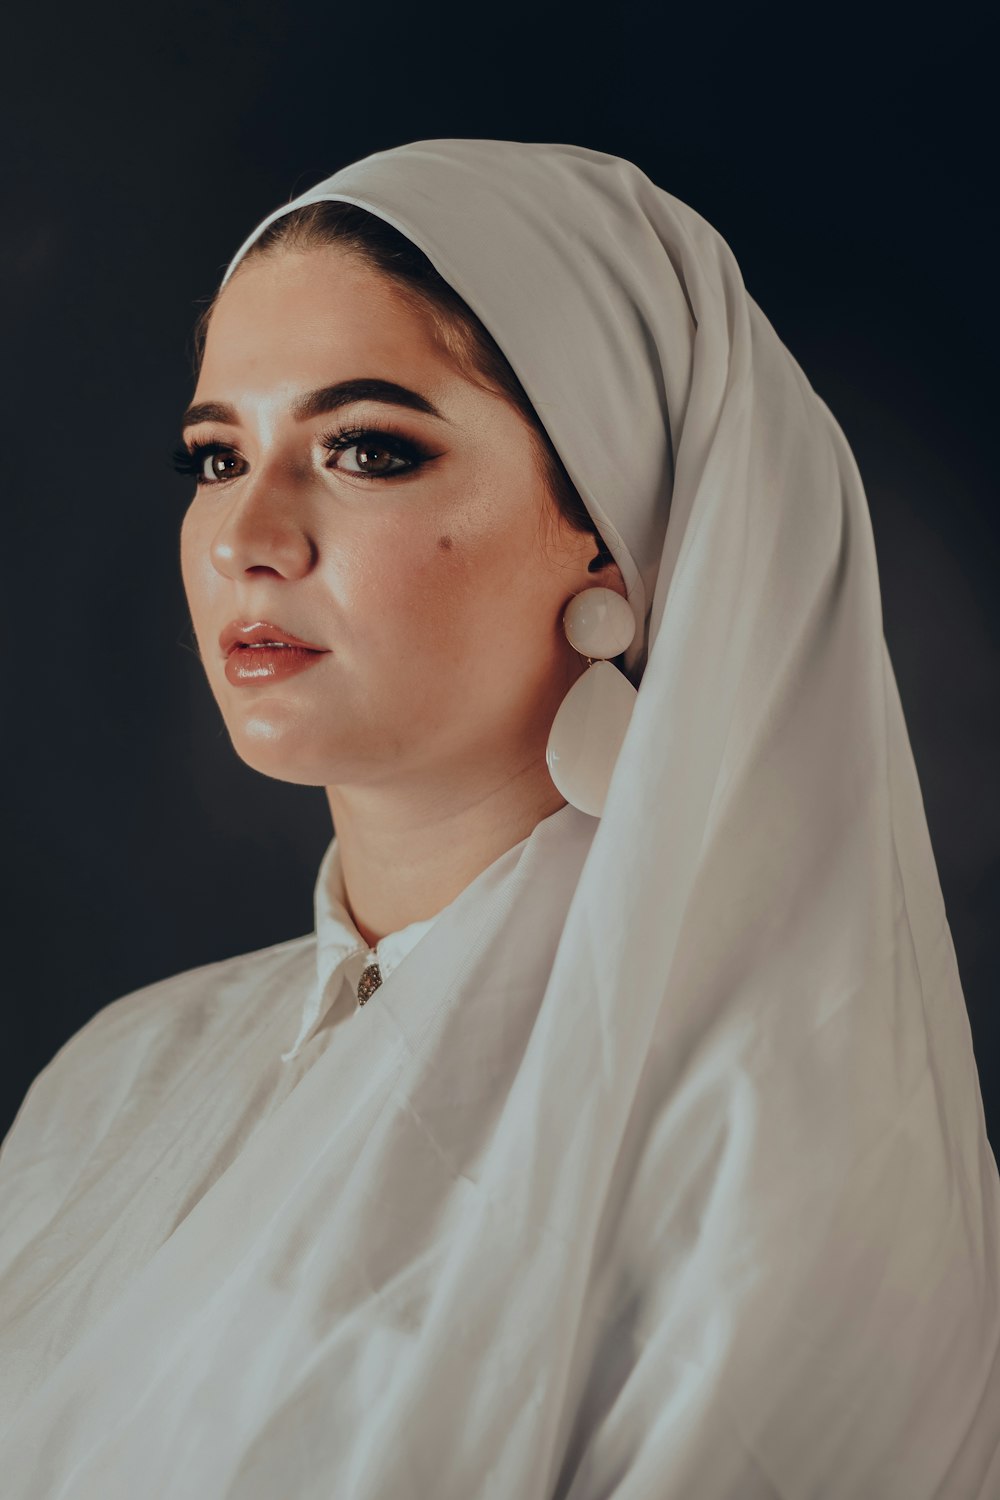 woman wearing white dress and white hijab scarf